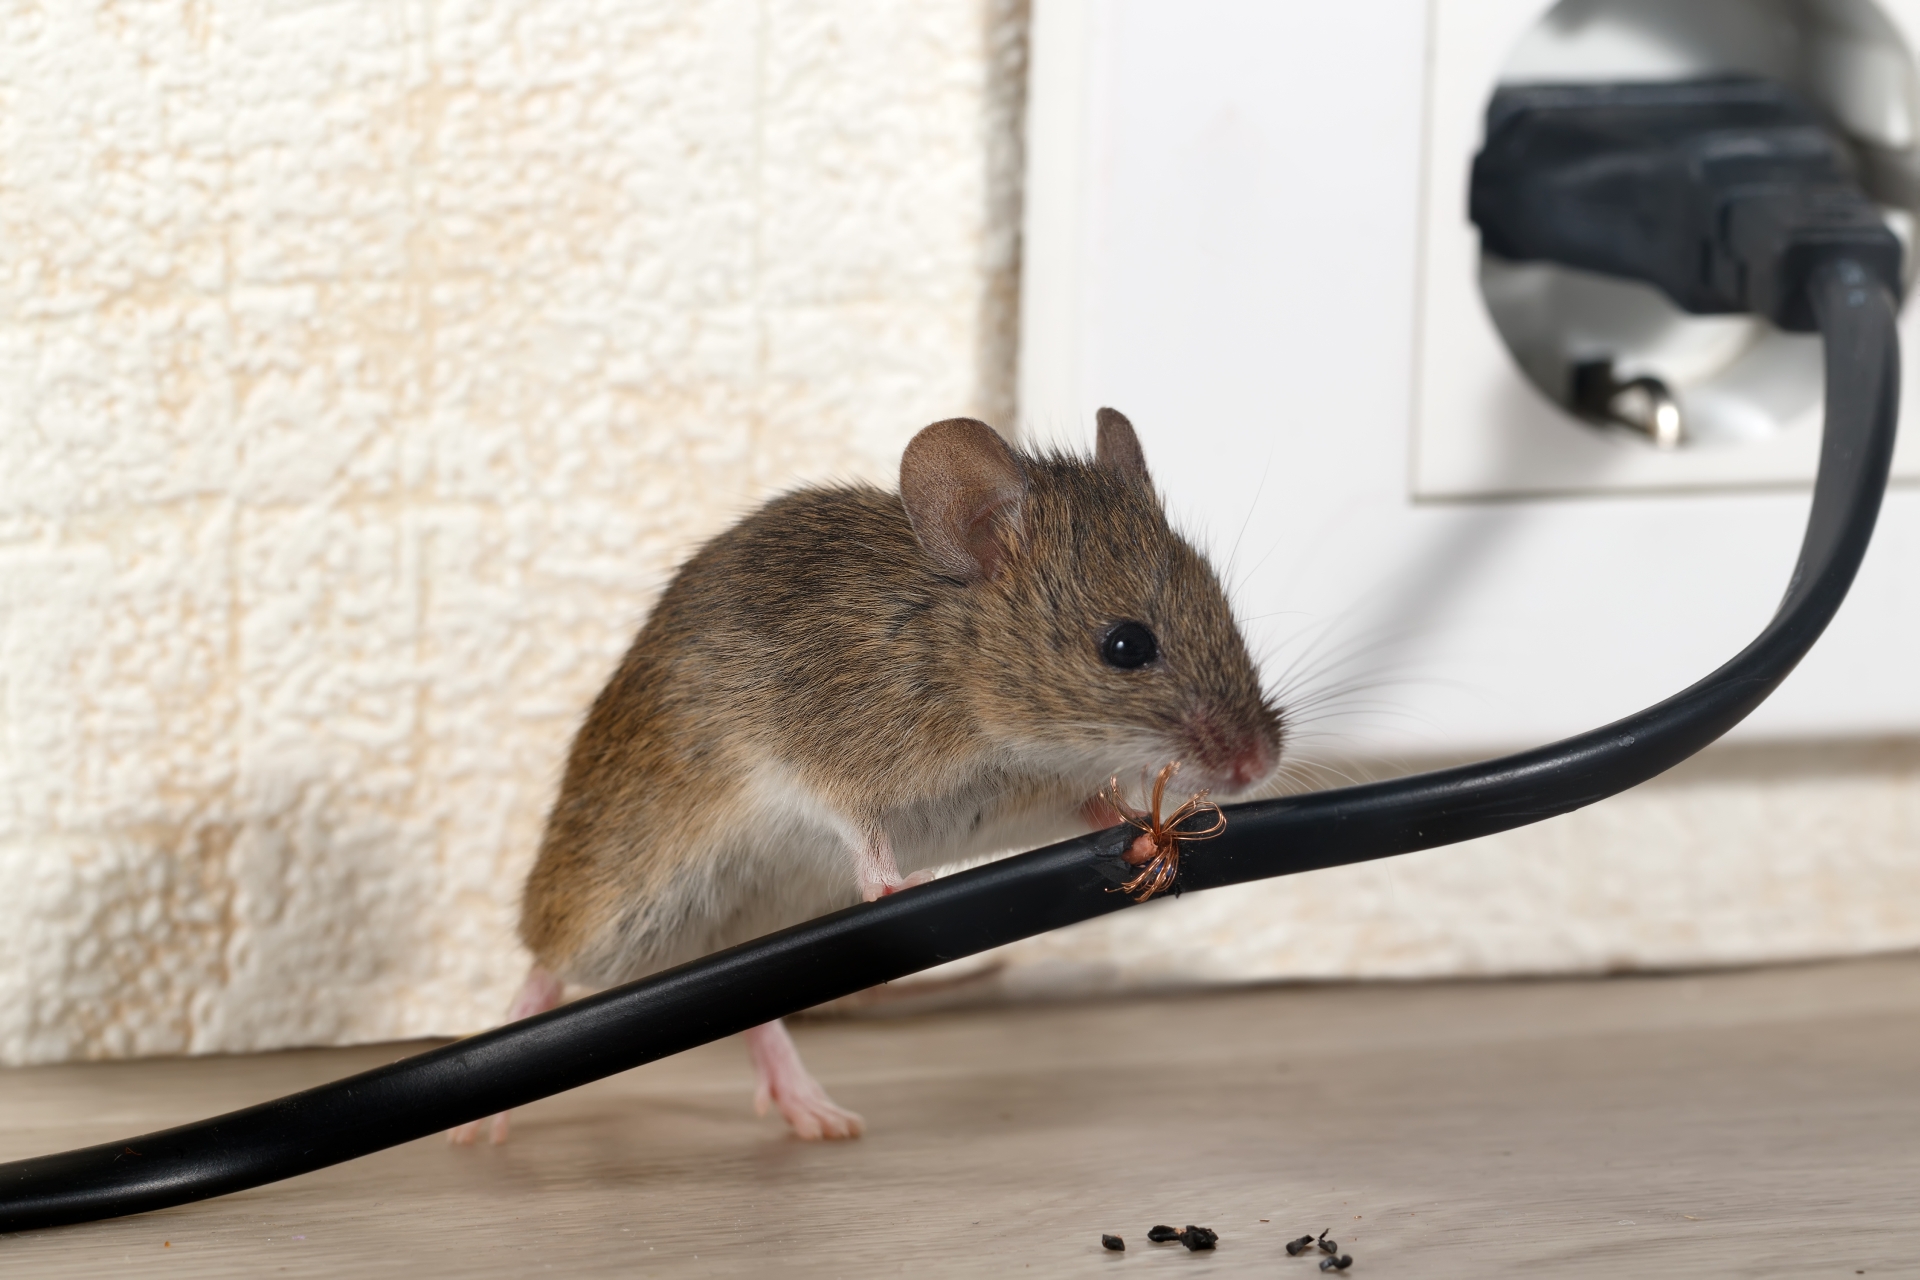 Mice Infestation, Pest Control in Darenth, Bean, DA2. Call Now 020 8166 9746